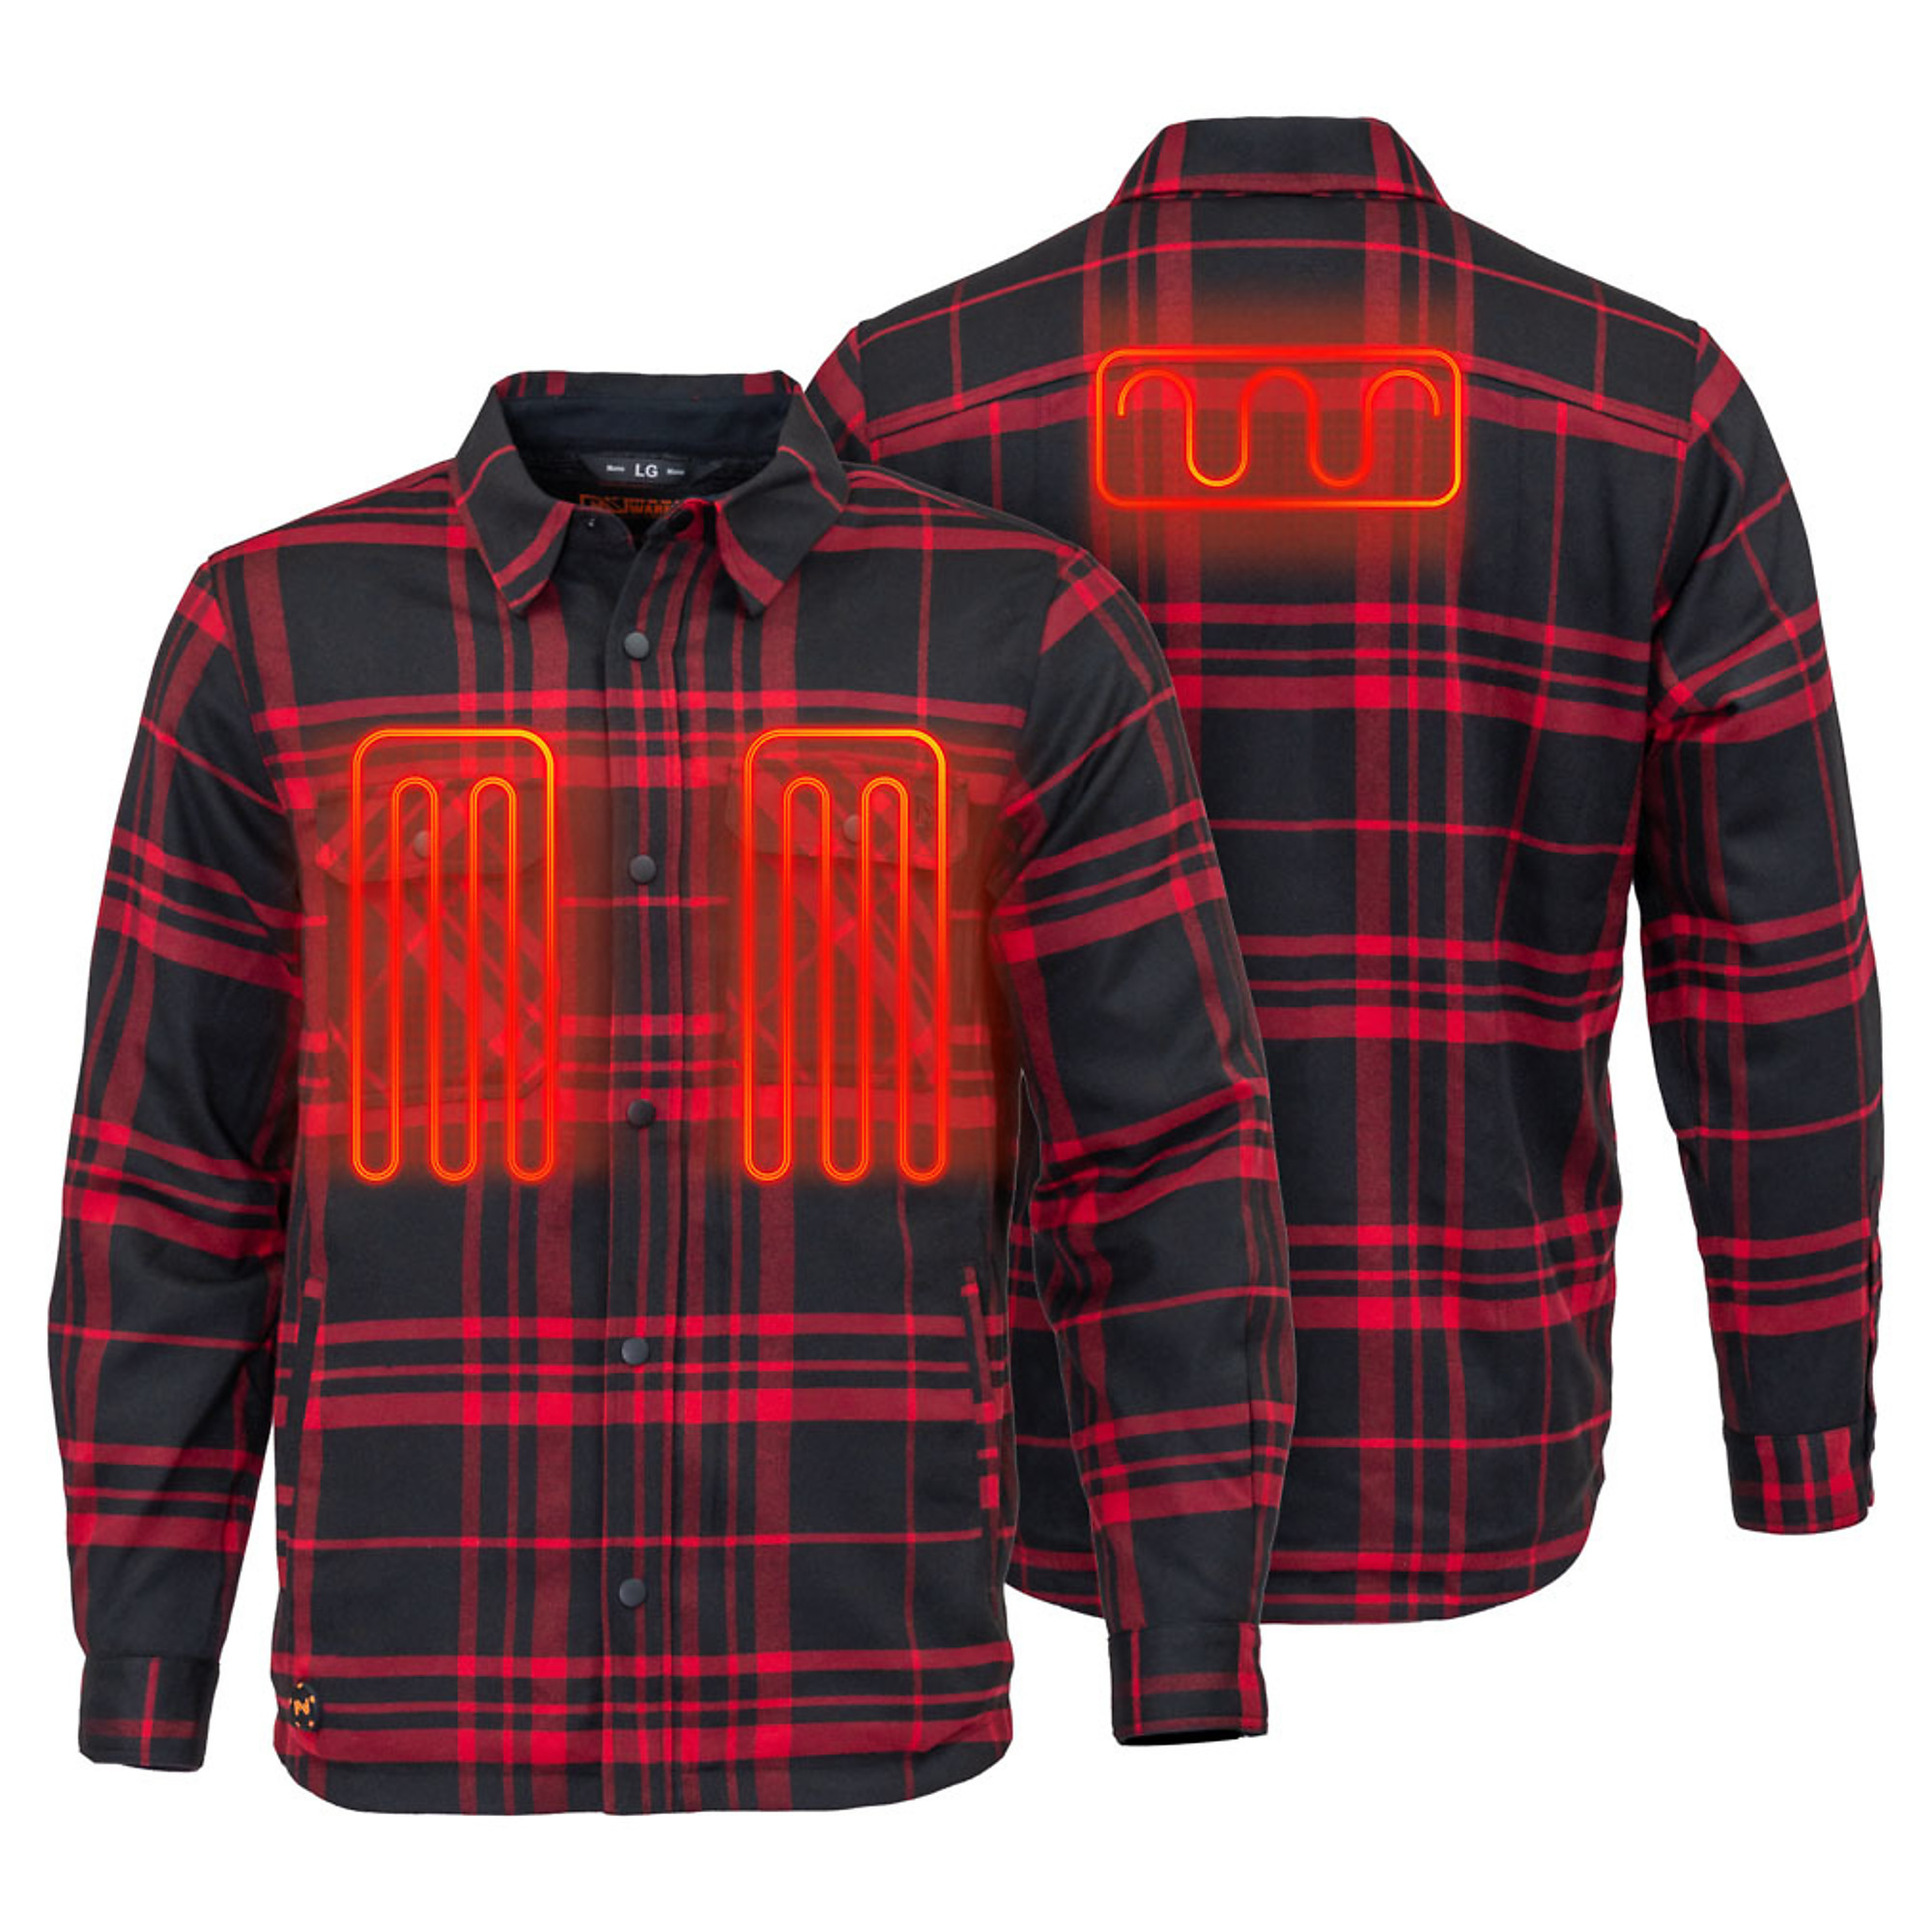 Fieldsheer, Men's Flannel Heated Jacket with 7.4v Battery, Size L, Color Black / Red, Model MWMJ53010423